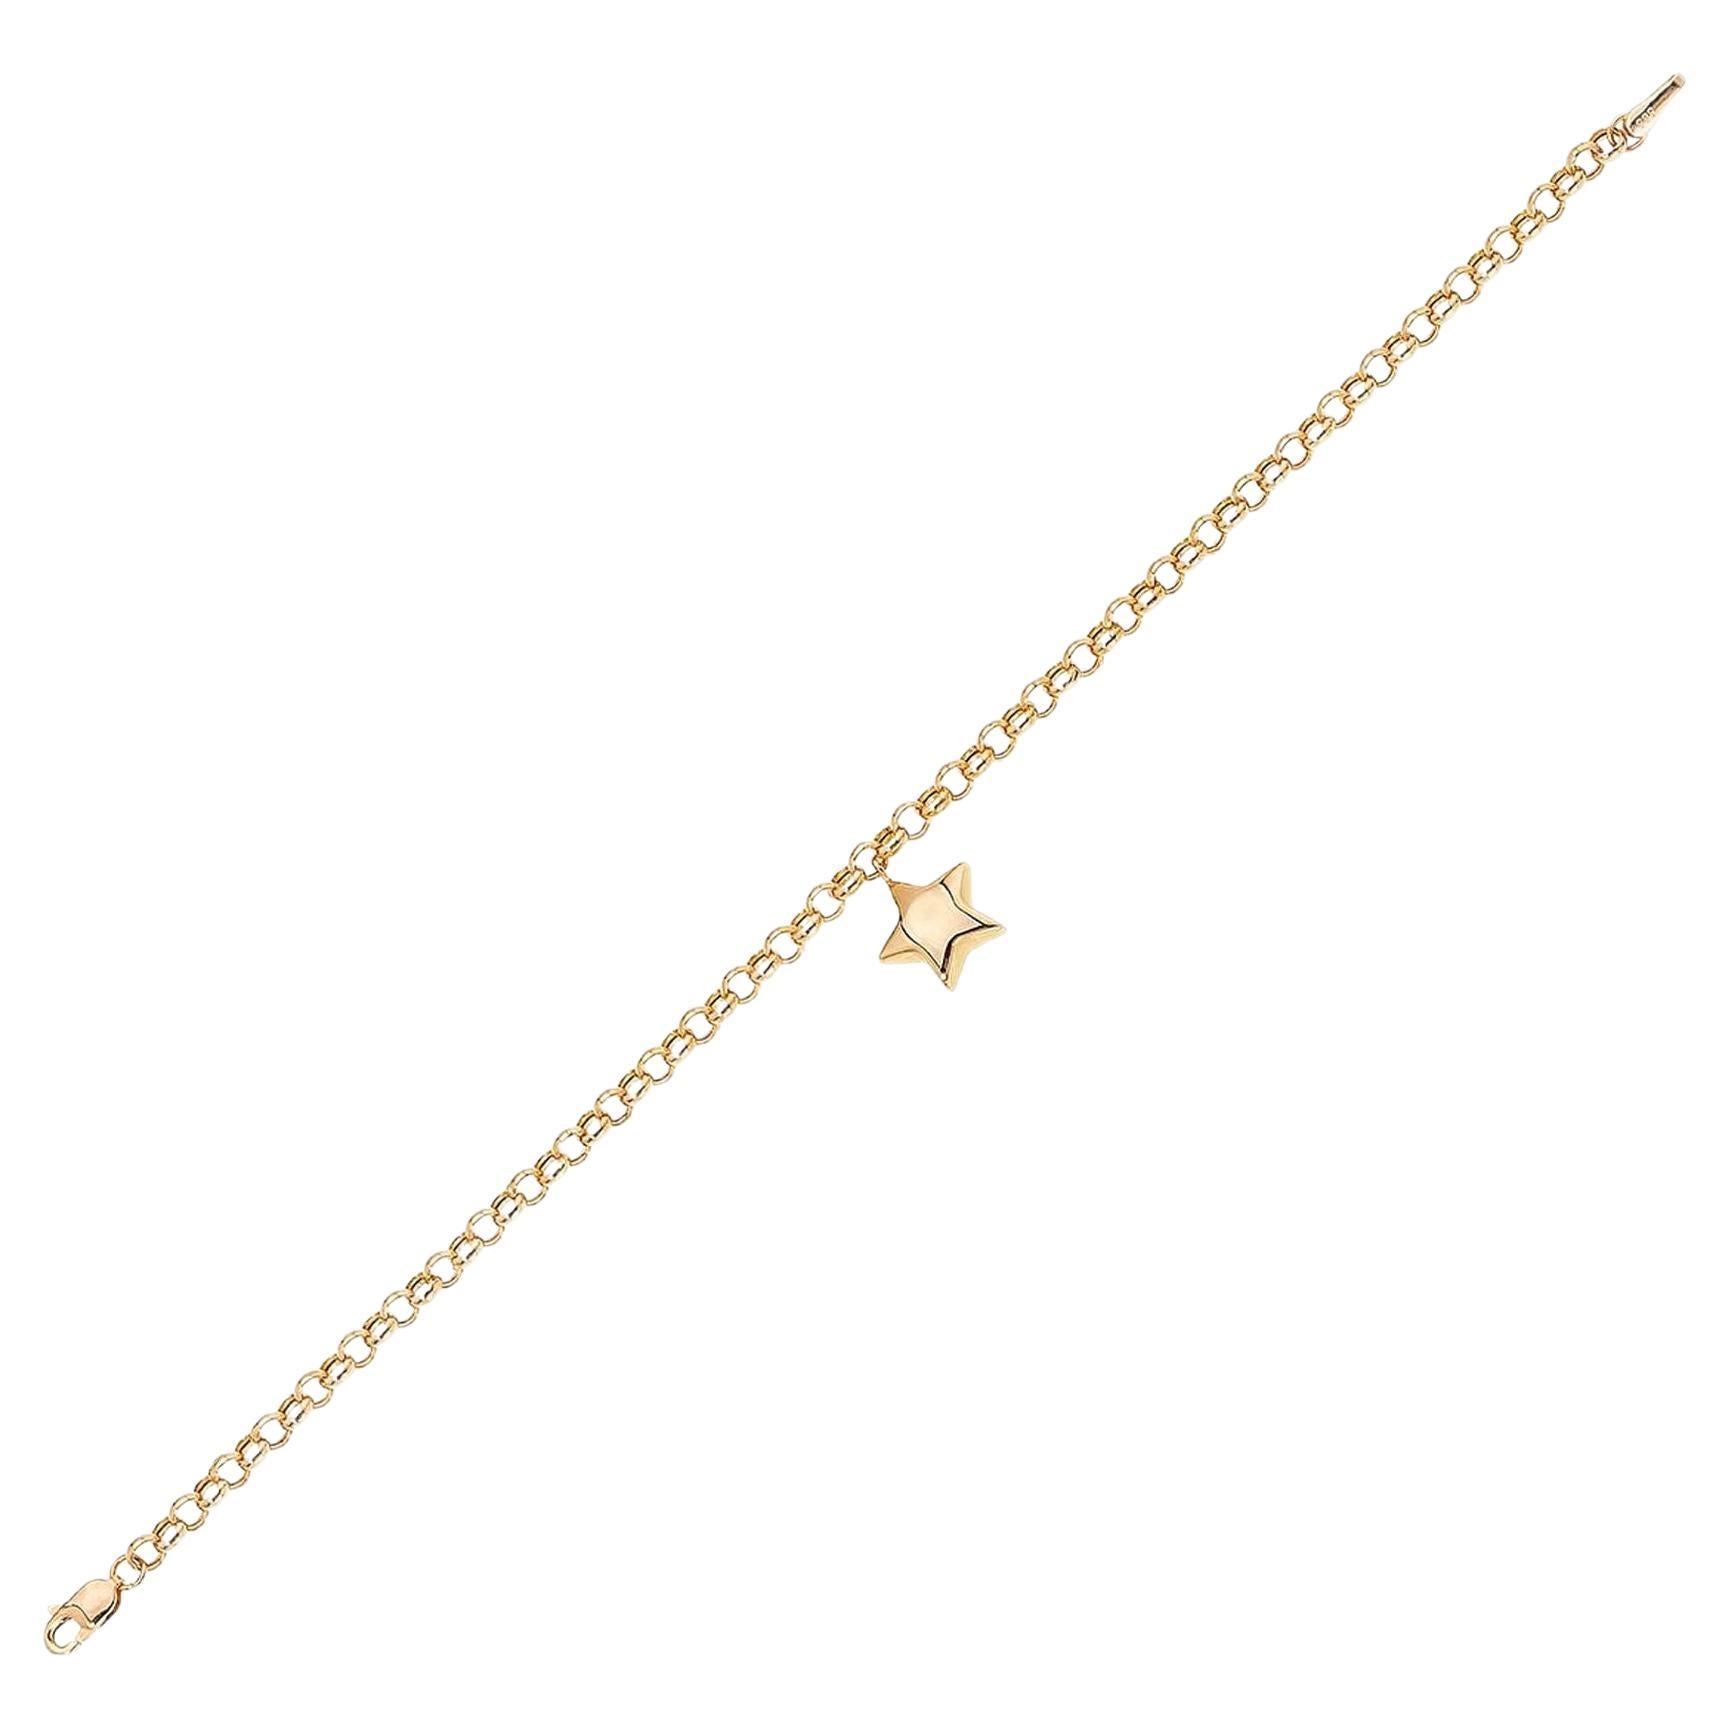 14 karat gold Star Charm Bracelet. Chain Bracelet with Star shaped pendant. For Sale